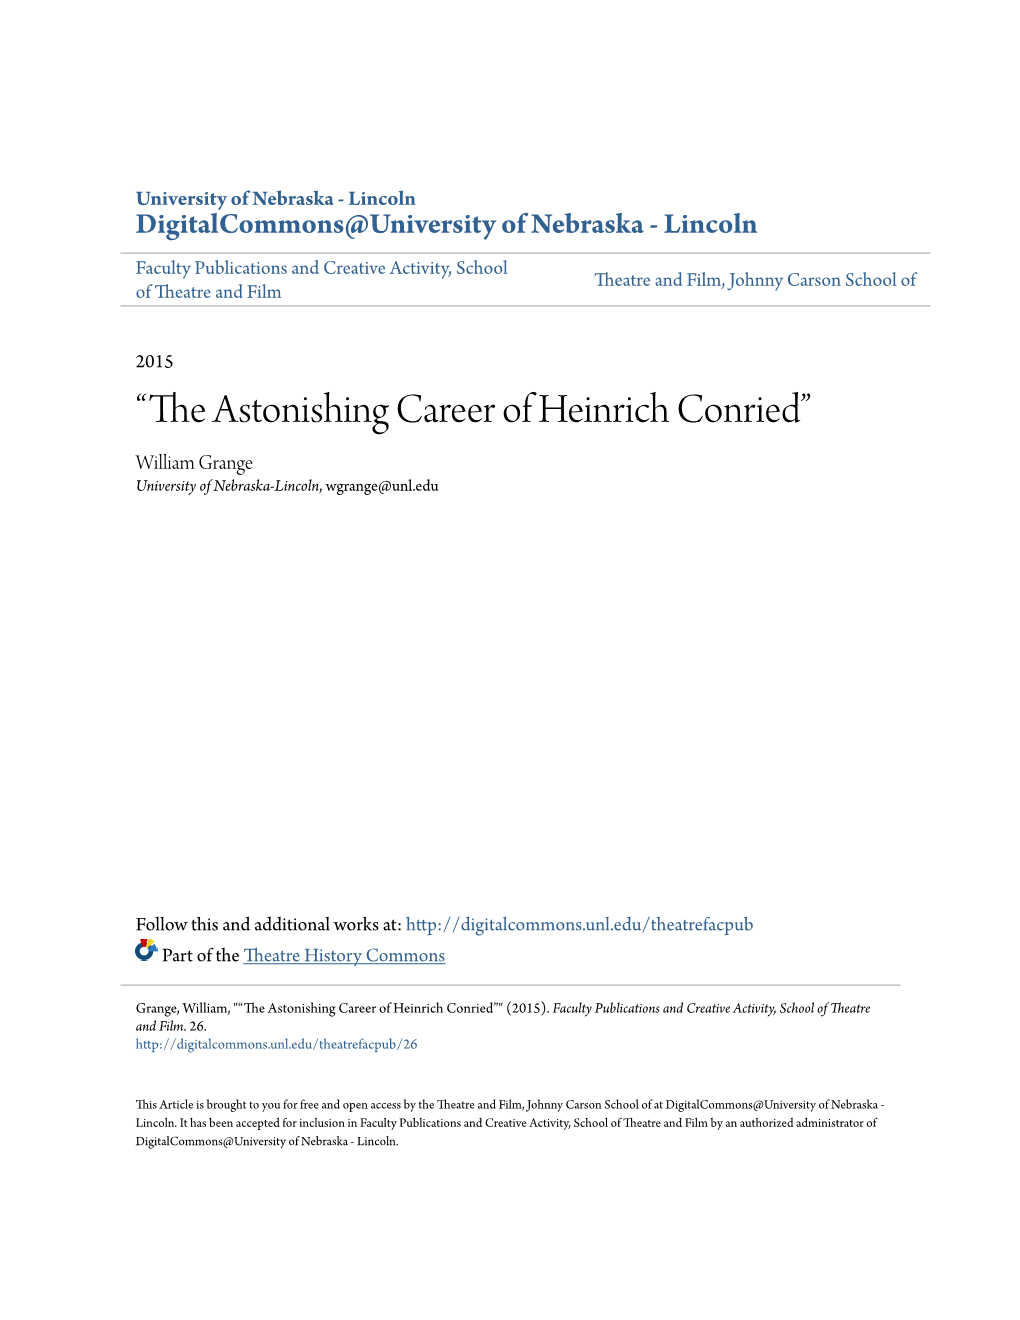 The Astonishing Career of Heinrich Conried” William Grange University of Nebraska-Lincoln, Wgrange@Unl.Edu